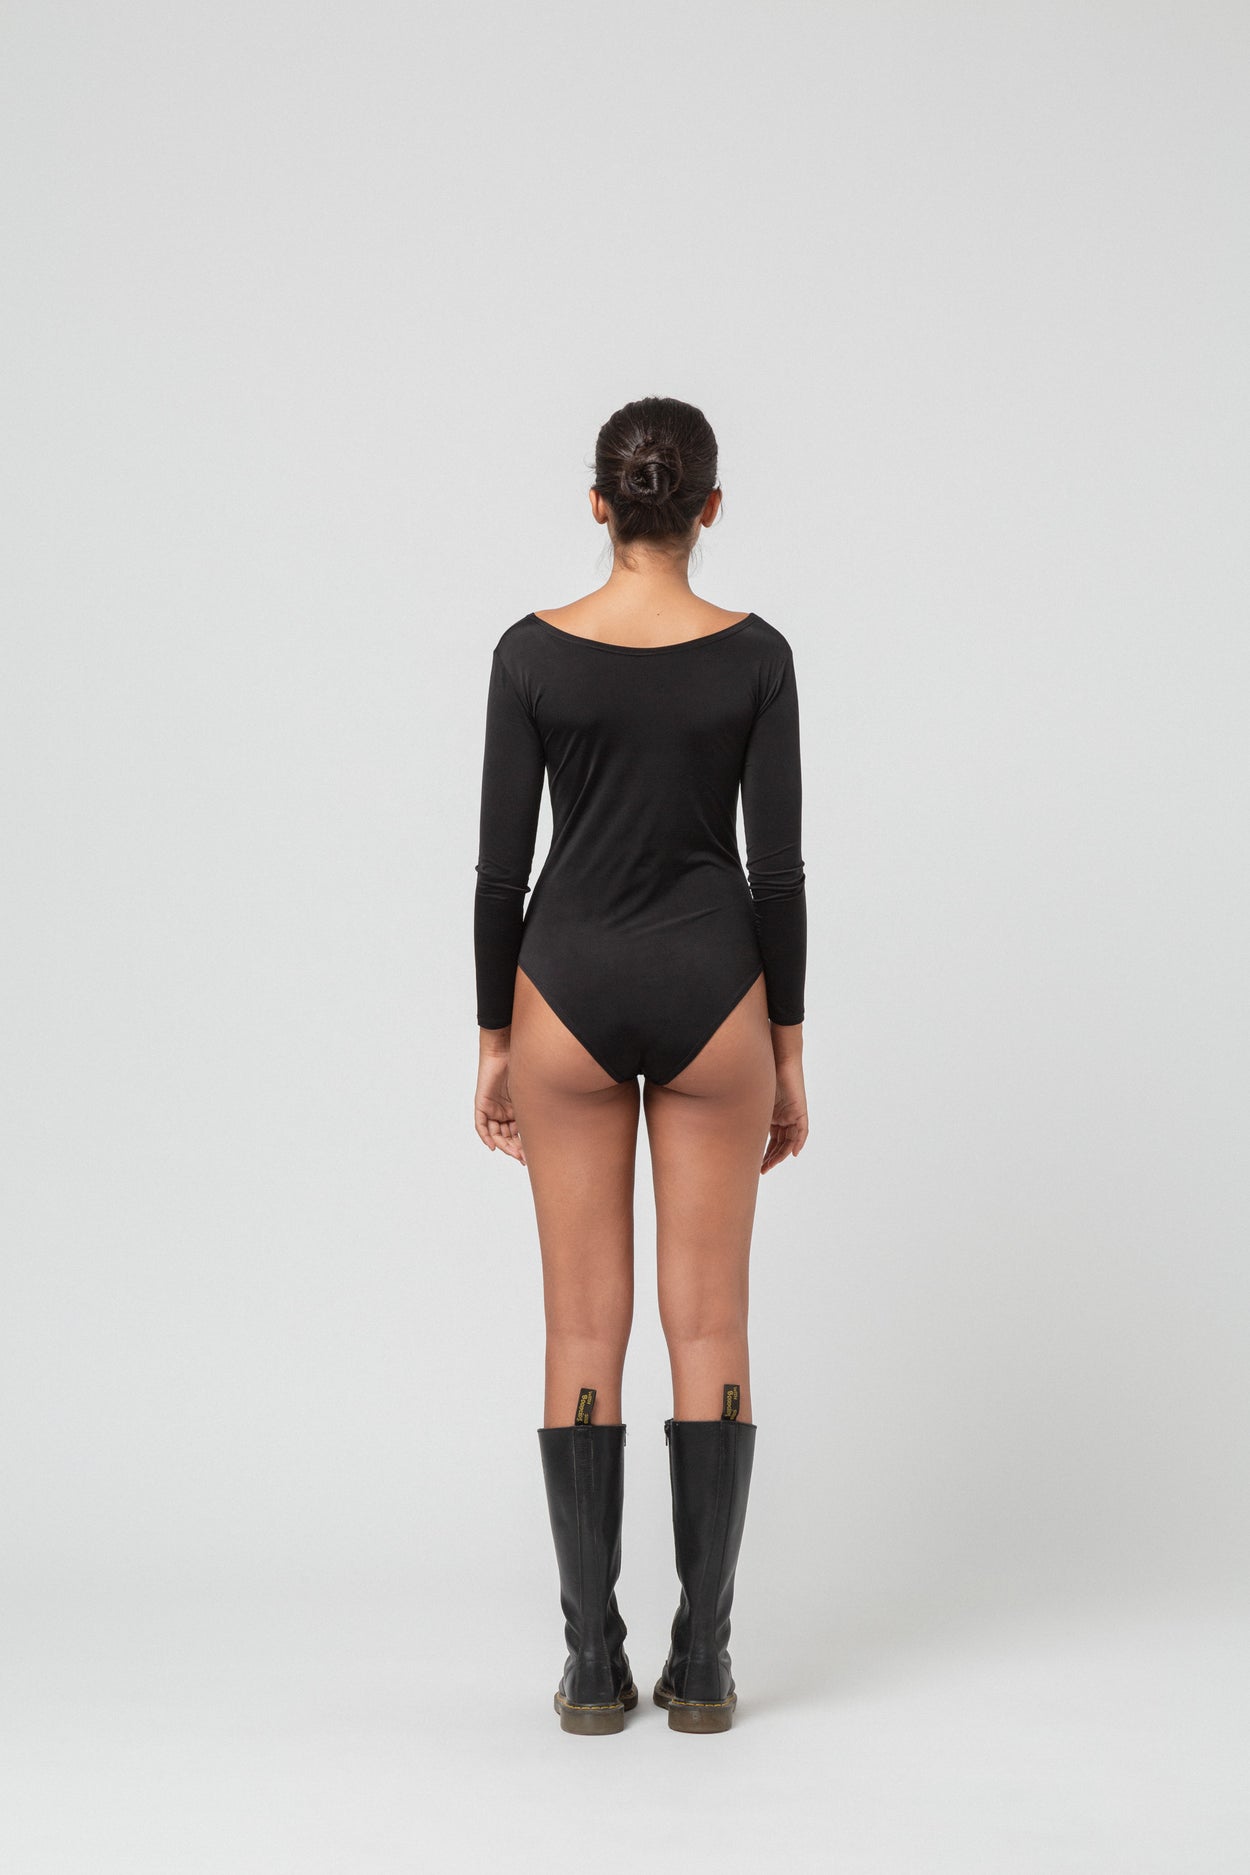 Black Ballerina Body